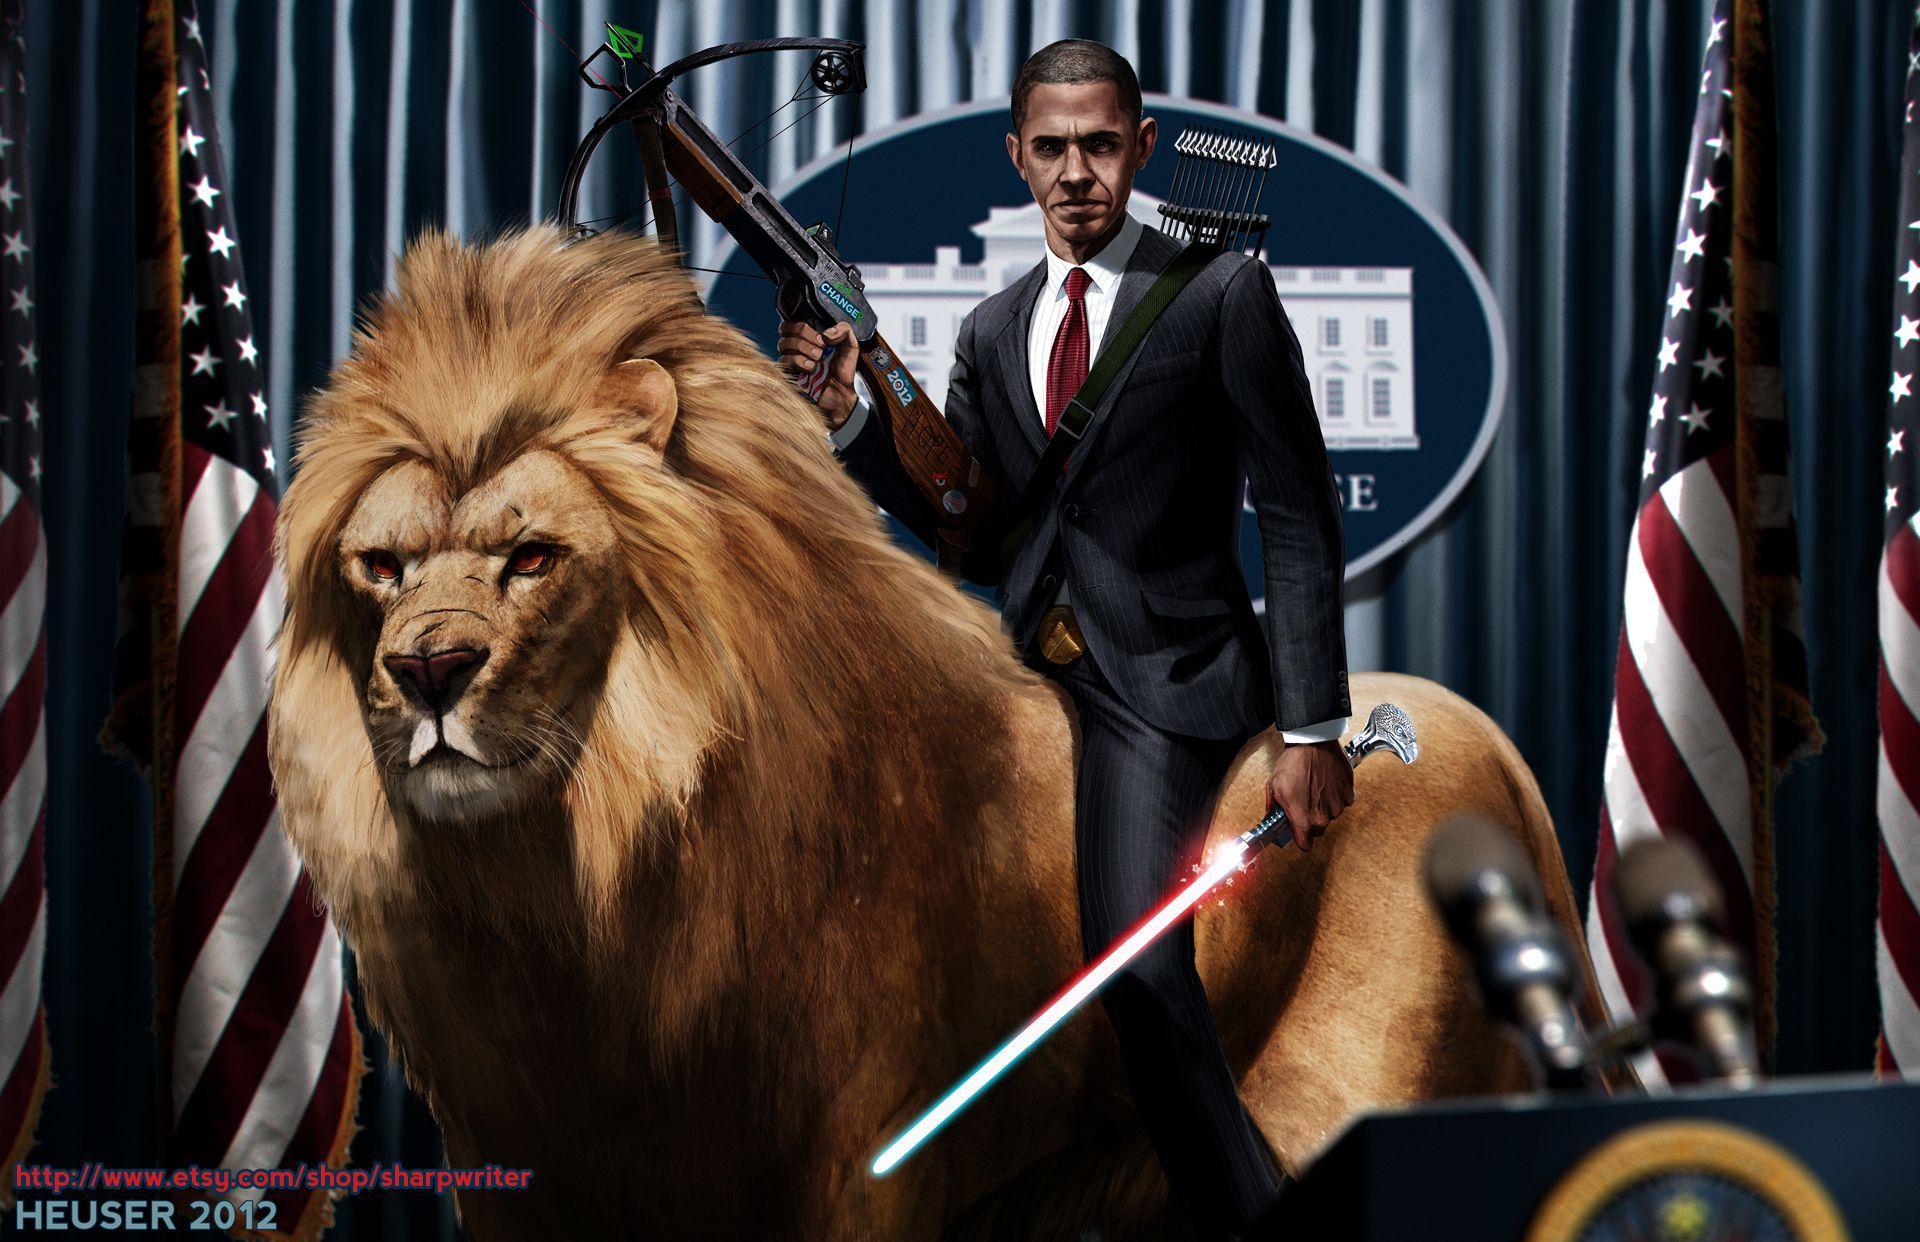 Barack Obama Wallpaper and Background Image